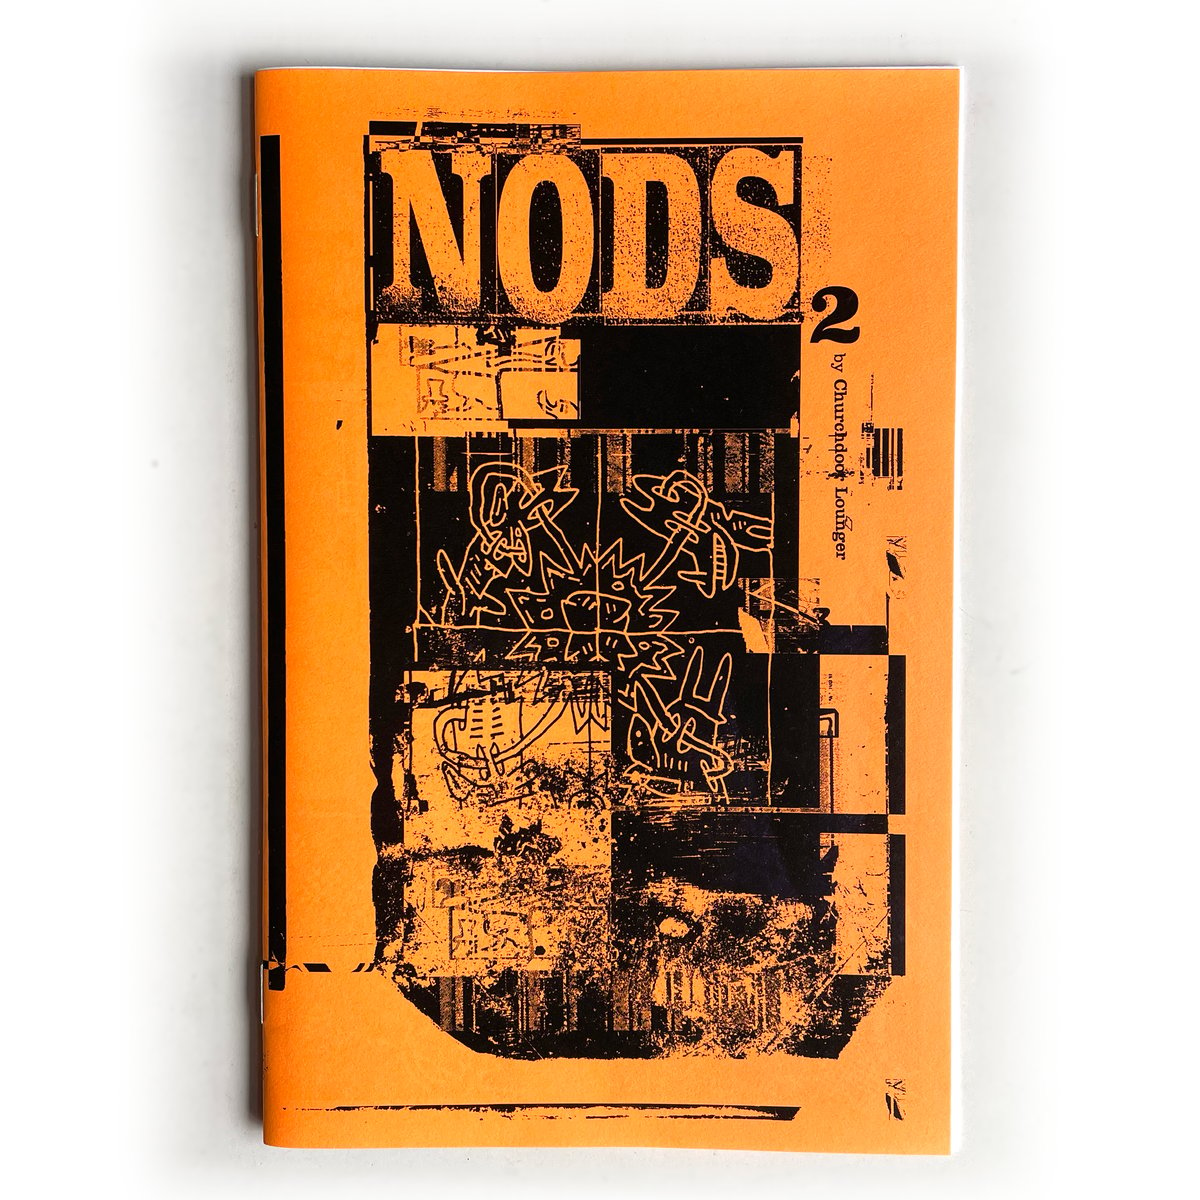 NODS #2 (Unlimited Orange Edition)